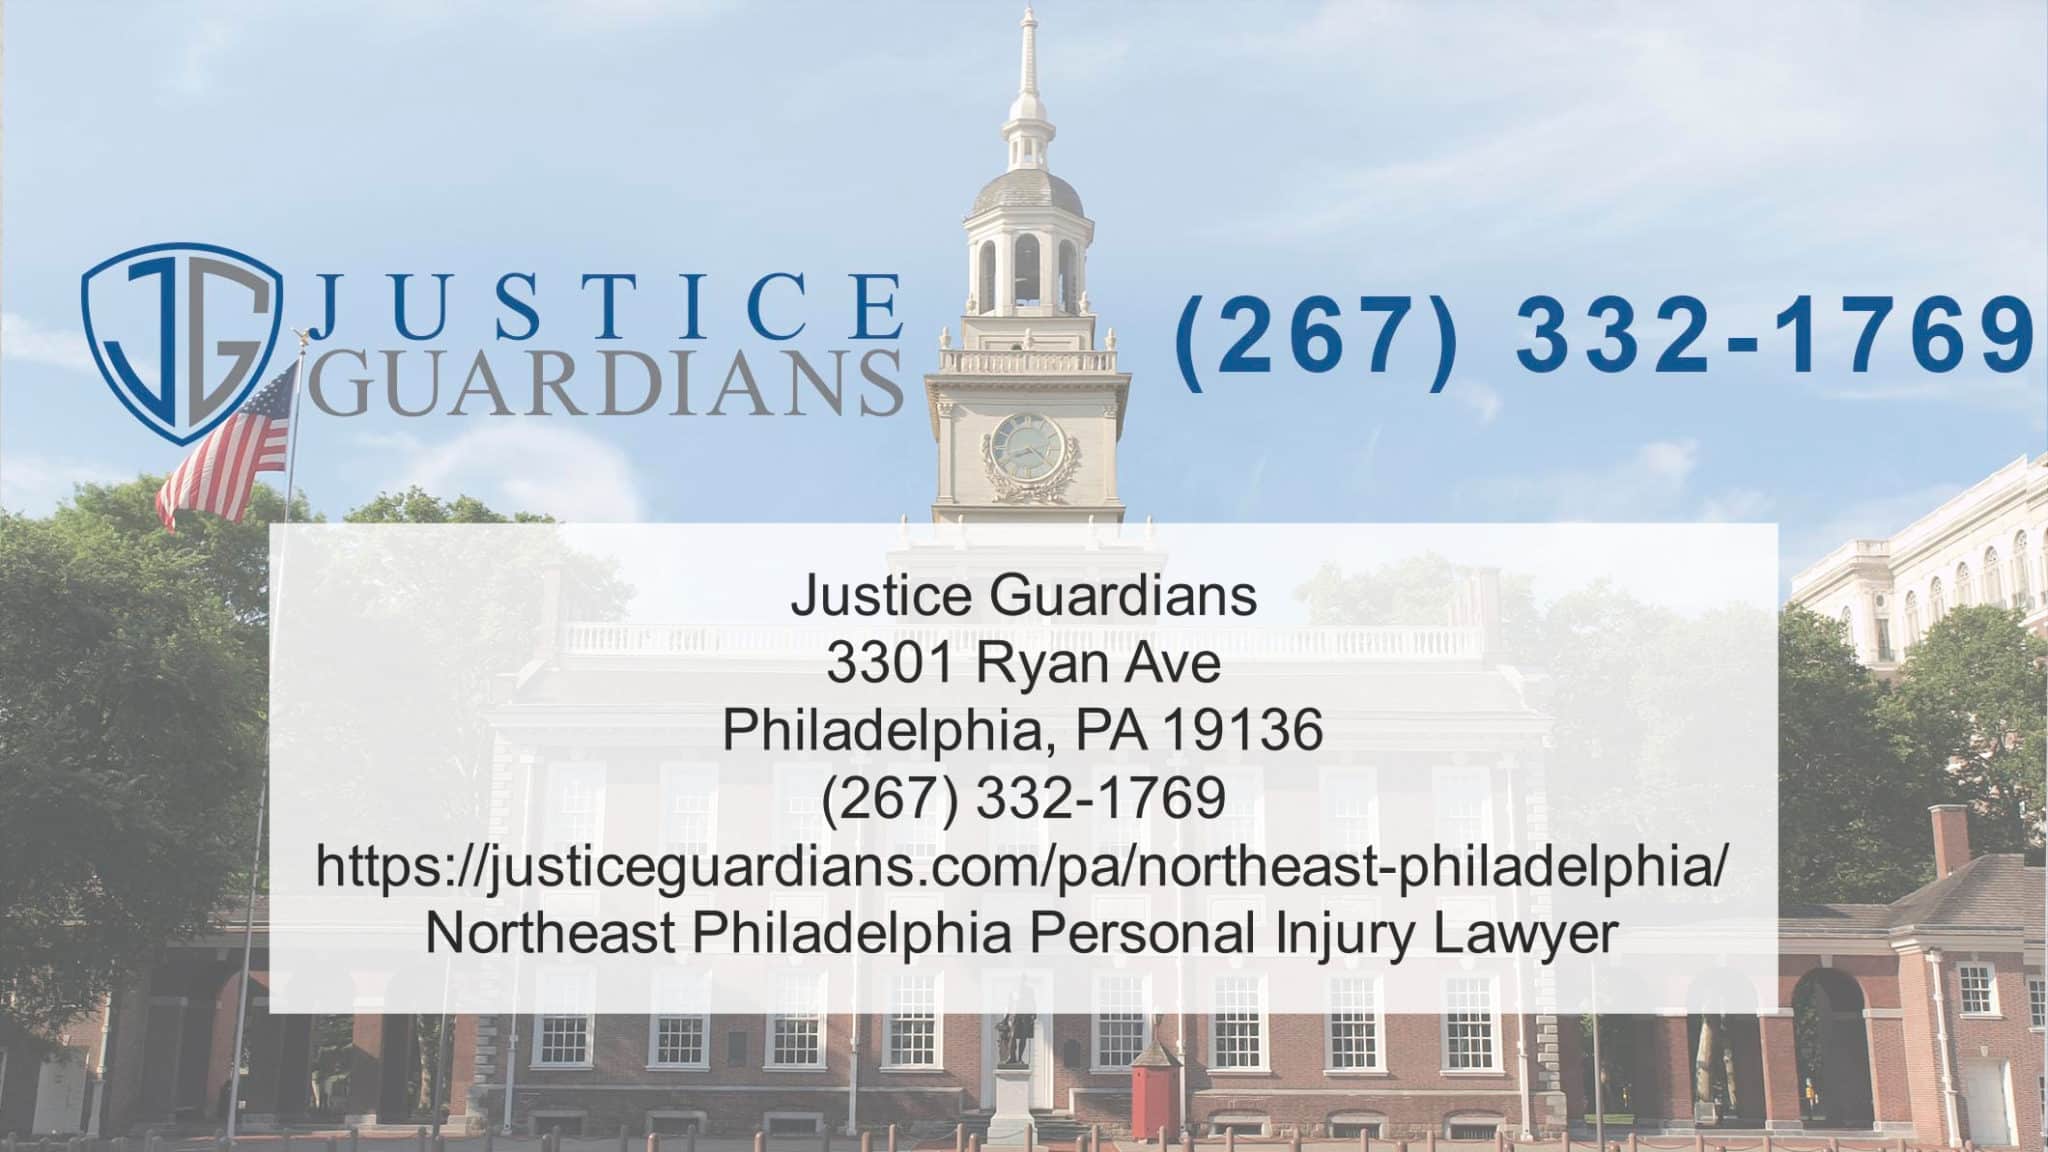 Personal-Injury-Lawyer-Near-Me-Northeast-Philadelphia-Justice-Guardians-scaled-1.jpeg